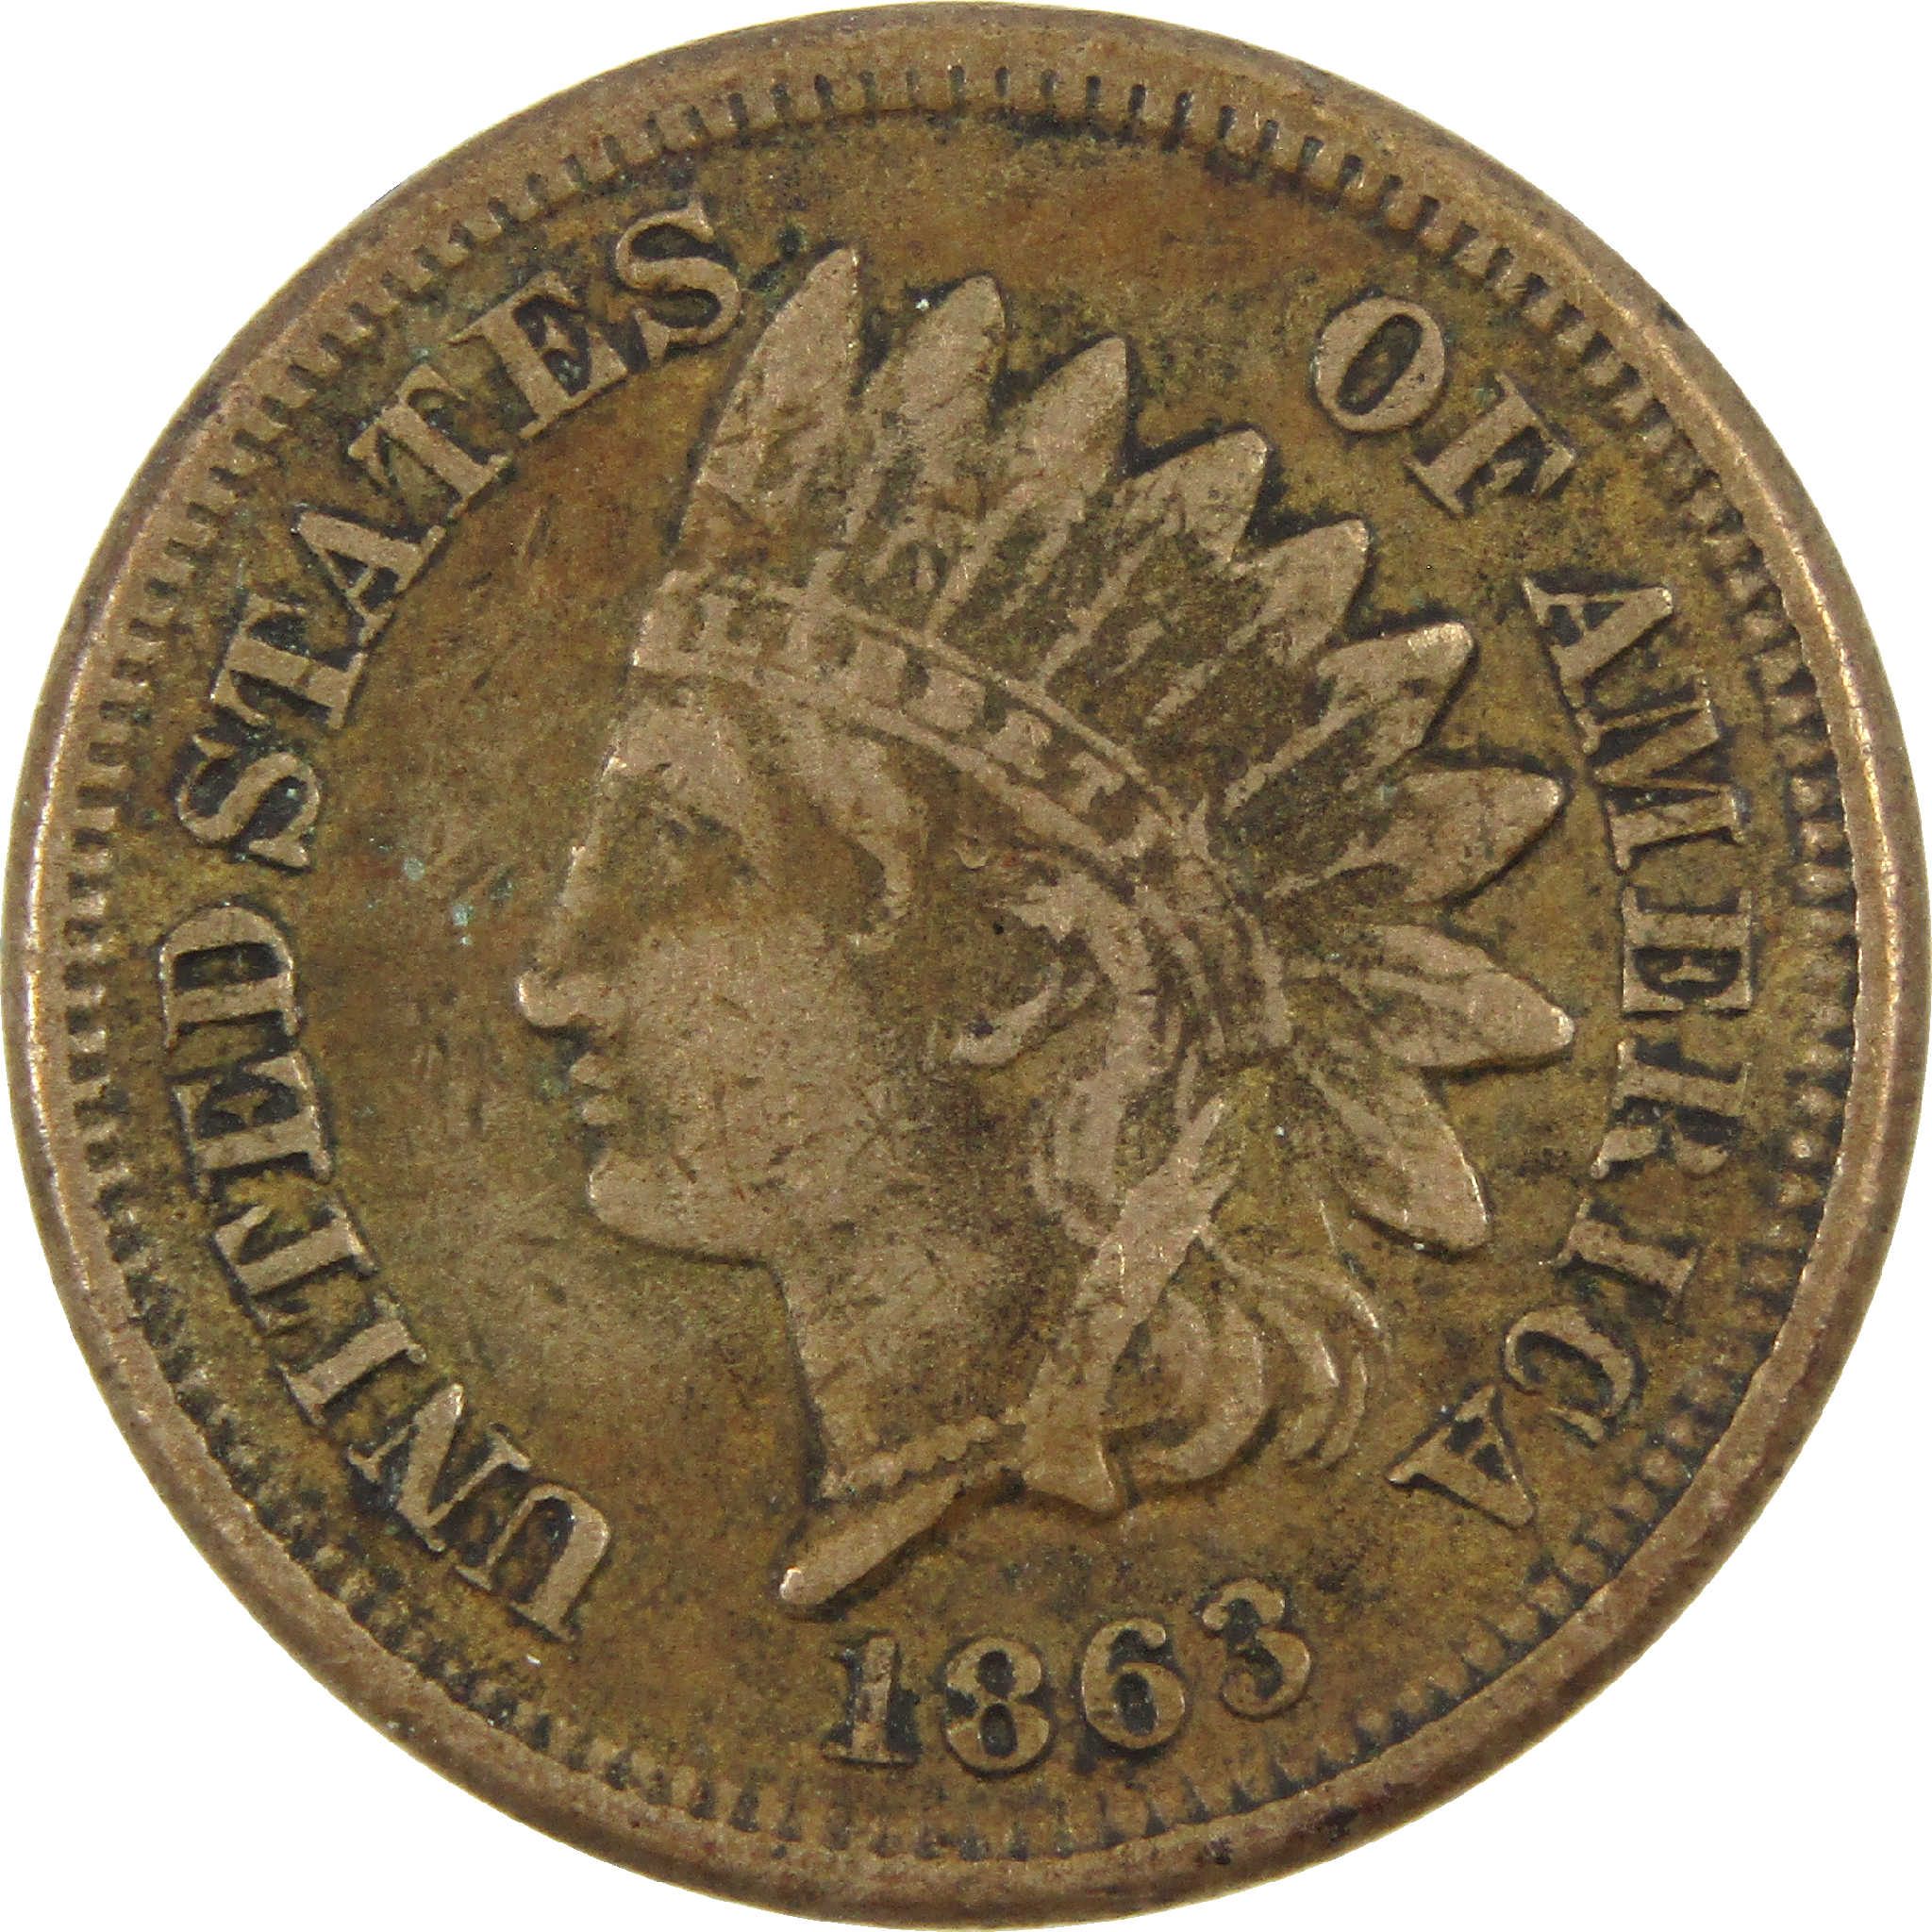 1863 Indian Head Cent VF Very Fine Copper-Nickel Penny 1c SKU:CPC6266